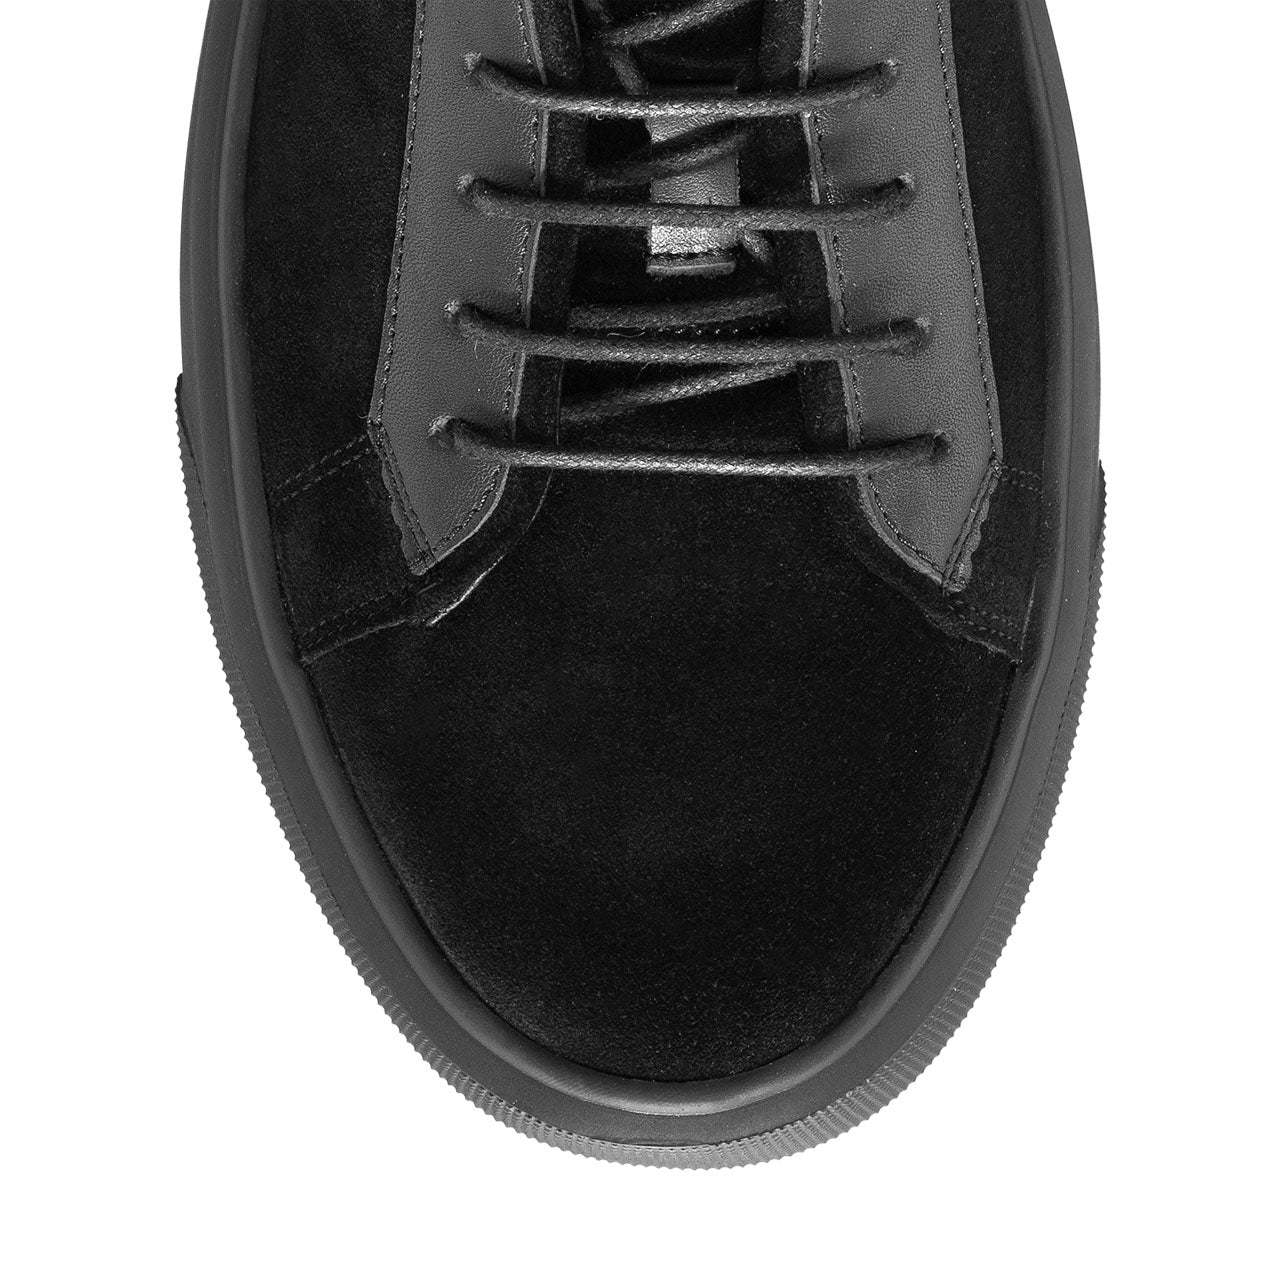 Pantofi sport barbati Saphire negru piele intoarsa